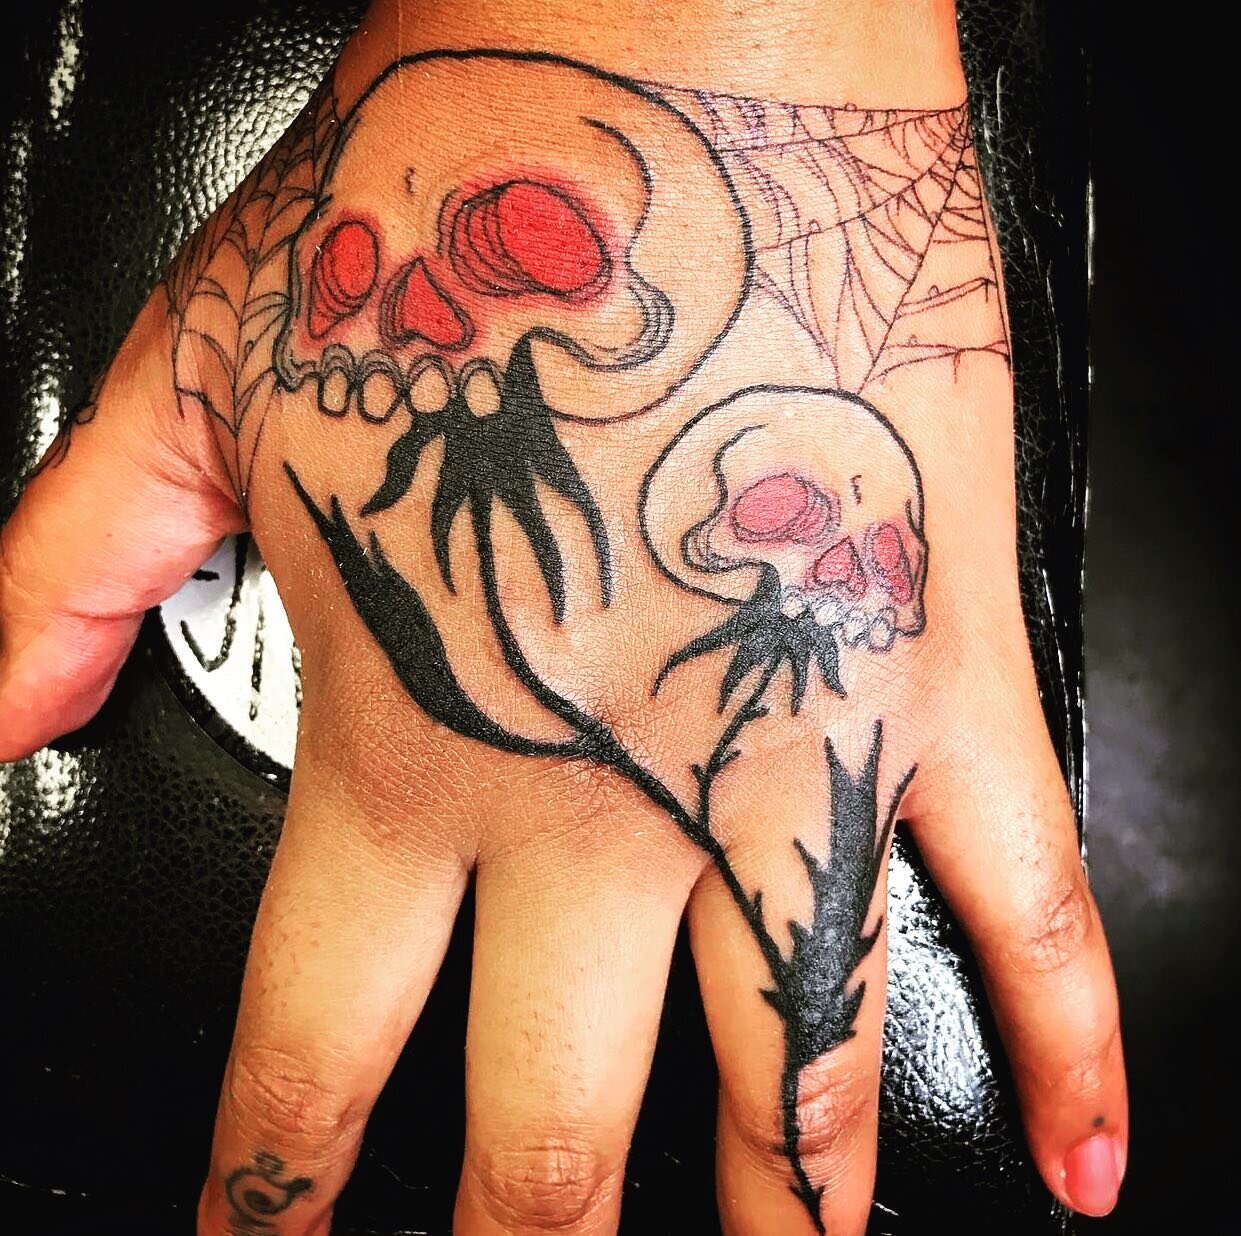 Check out this spooky ink by @theartant 🤟🏽

#tattoo #tattoos #tattooartist #art #artist #artofinstagram #artoftheday #horrorart #skulltattoo